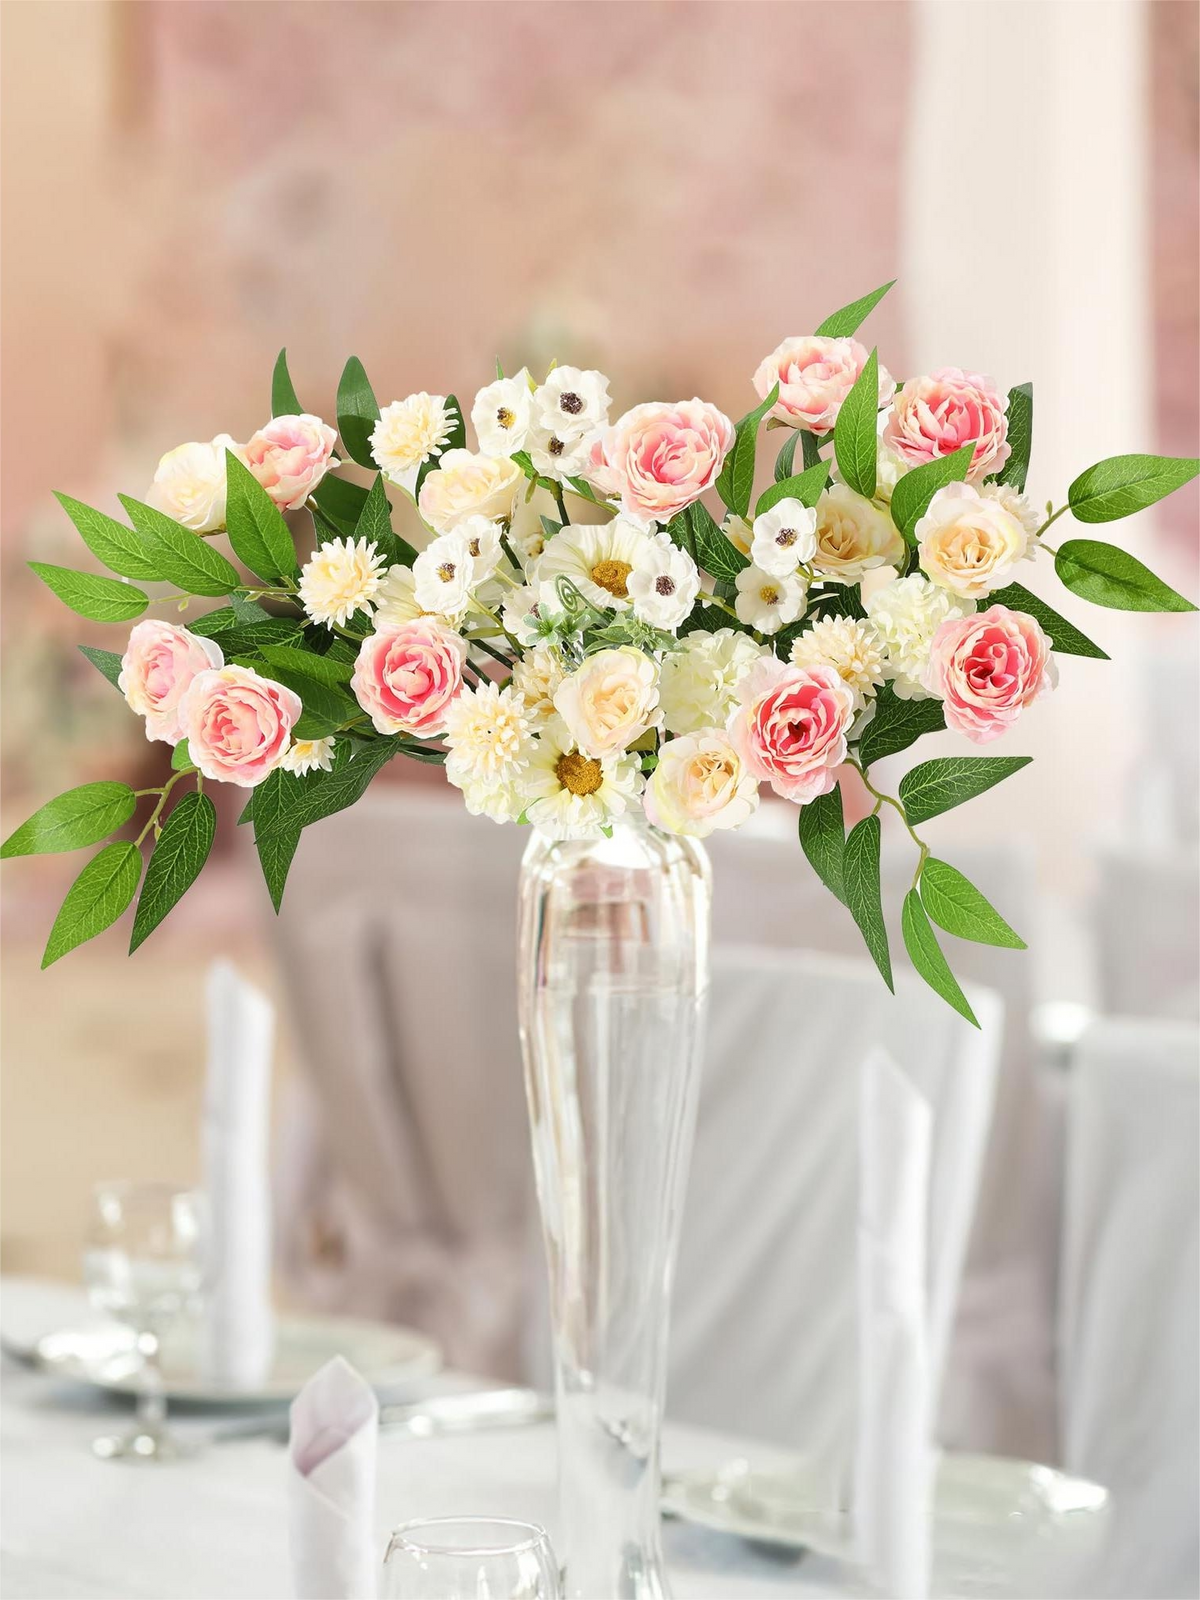 Fake Floral Artificial Flowers DIY Wedding Bouquet Box Set HH6016